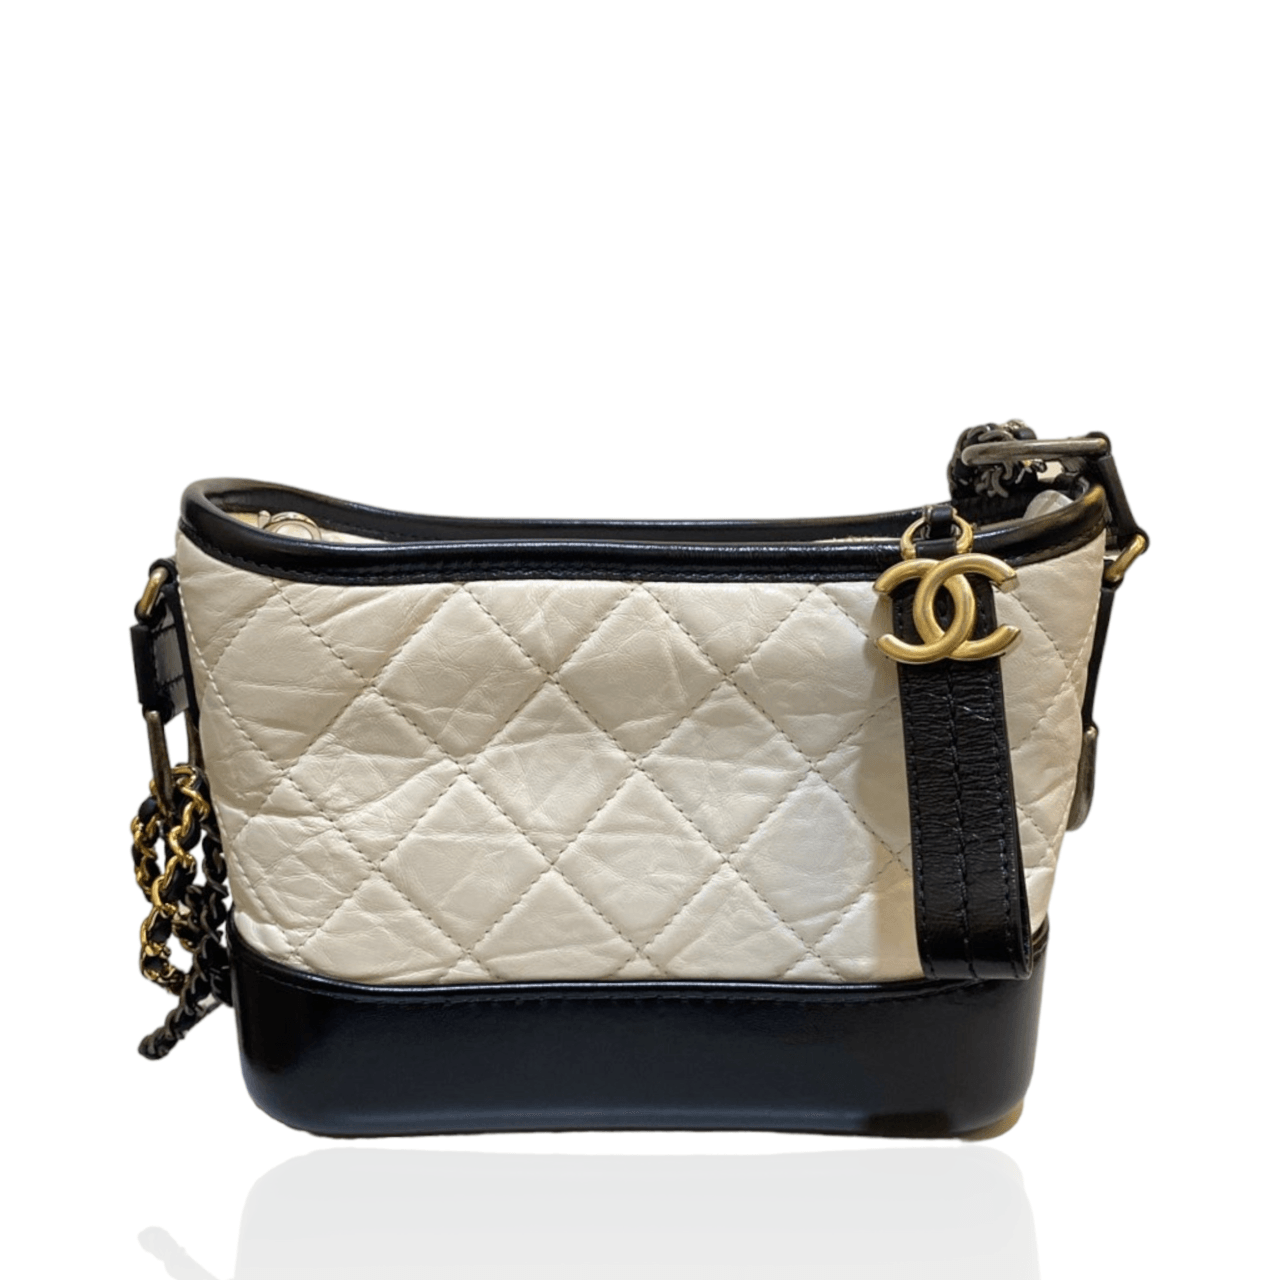 Chanel Gabrielle Black & White Sling Bag